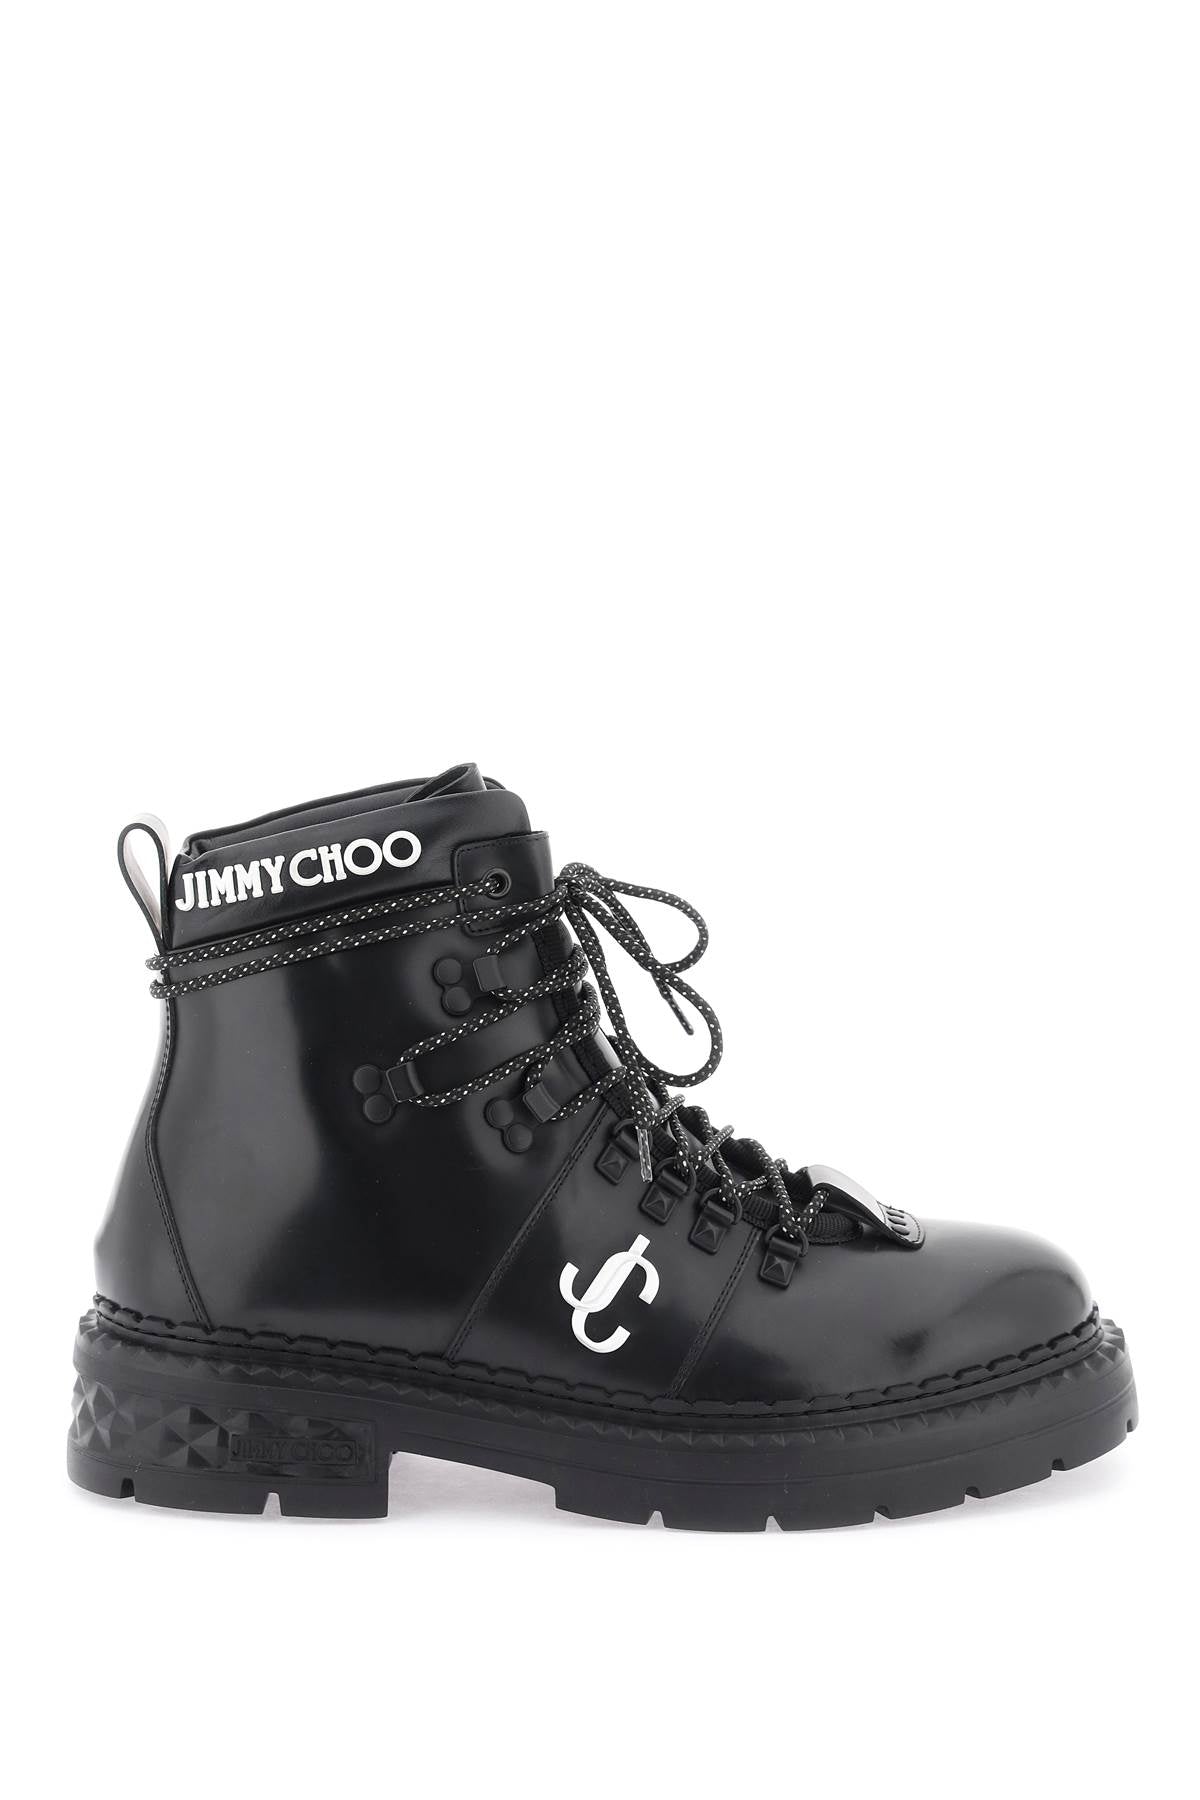 Jimmy choo 'marlow' hiking boots-0